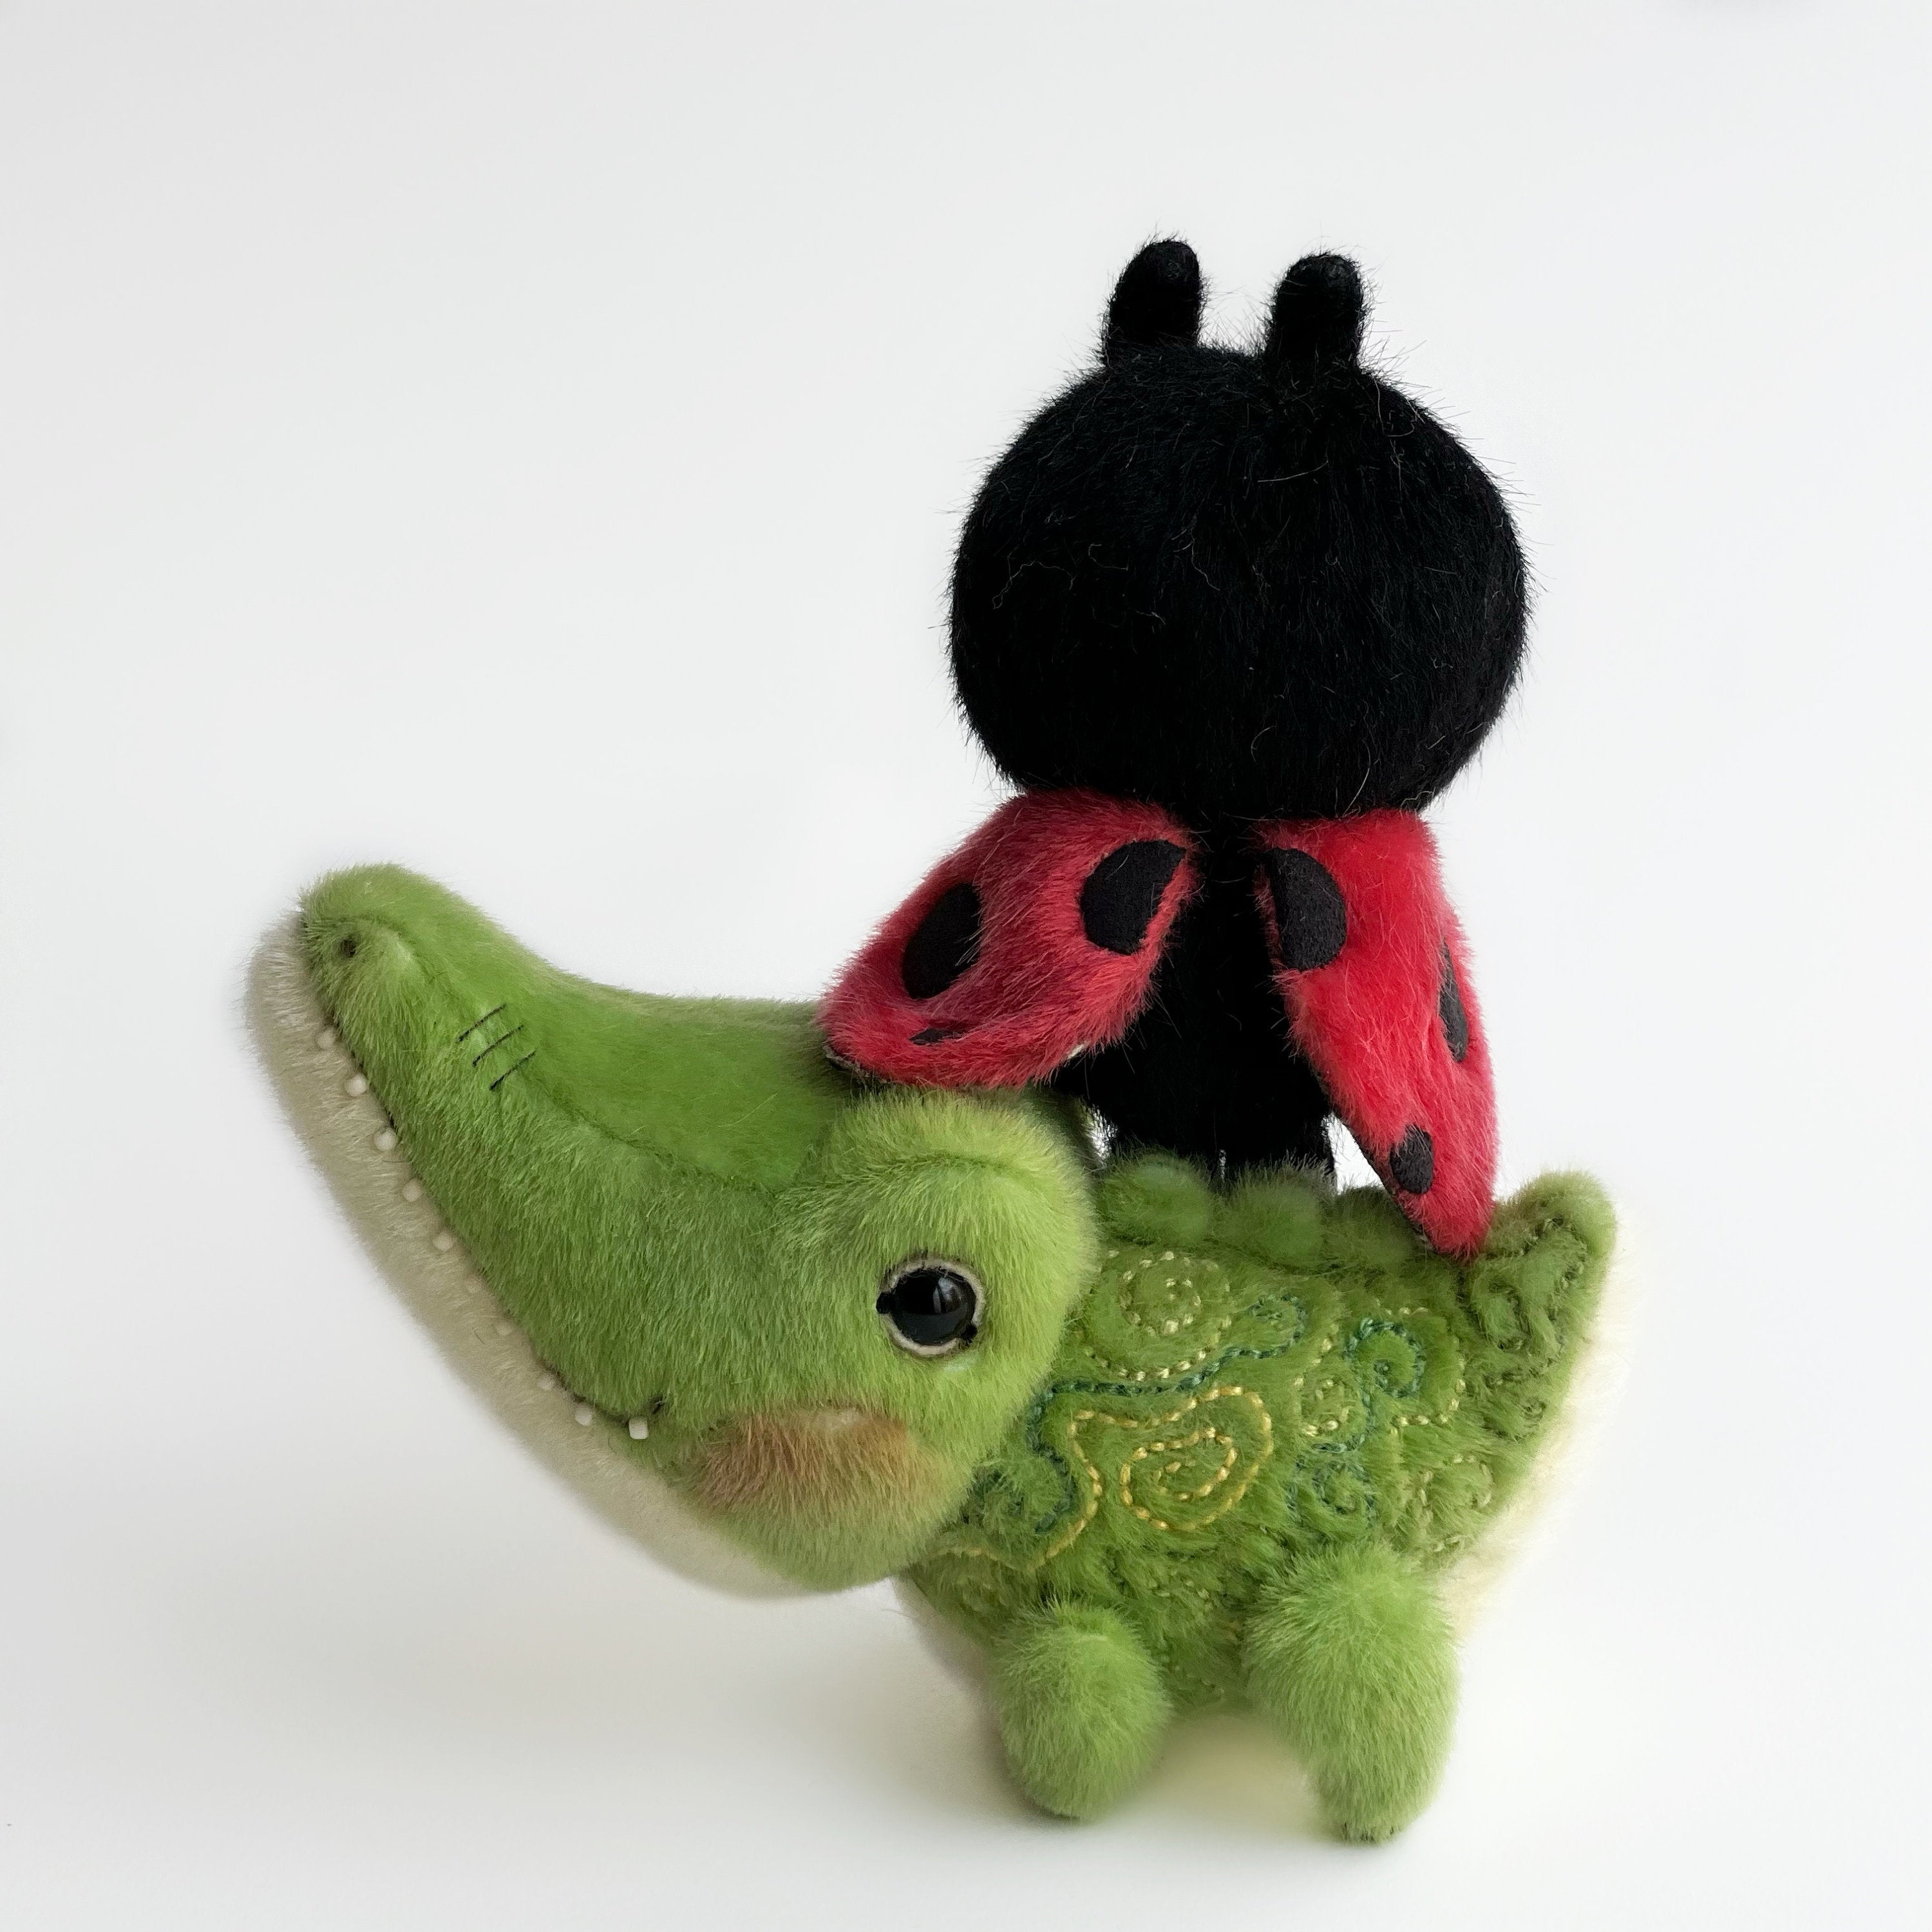 Crocodile - PDF sewing pattern, artist pattern, stuffed toy tutorials, alligator soft toy diy craft kit for adults gift by TSminibears